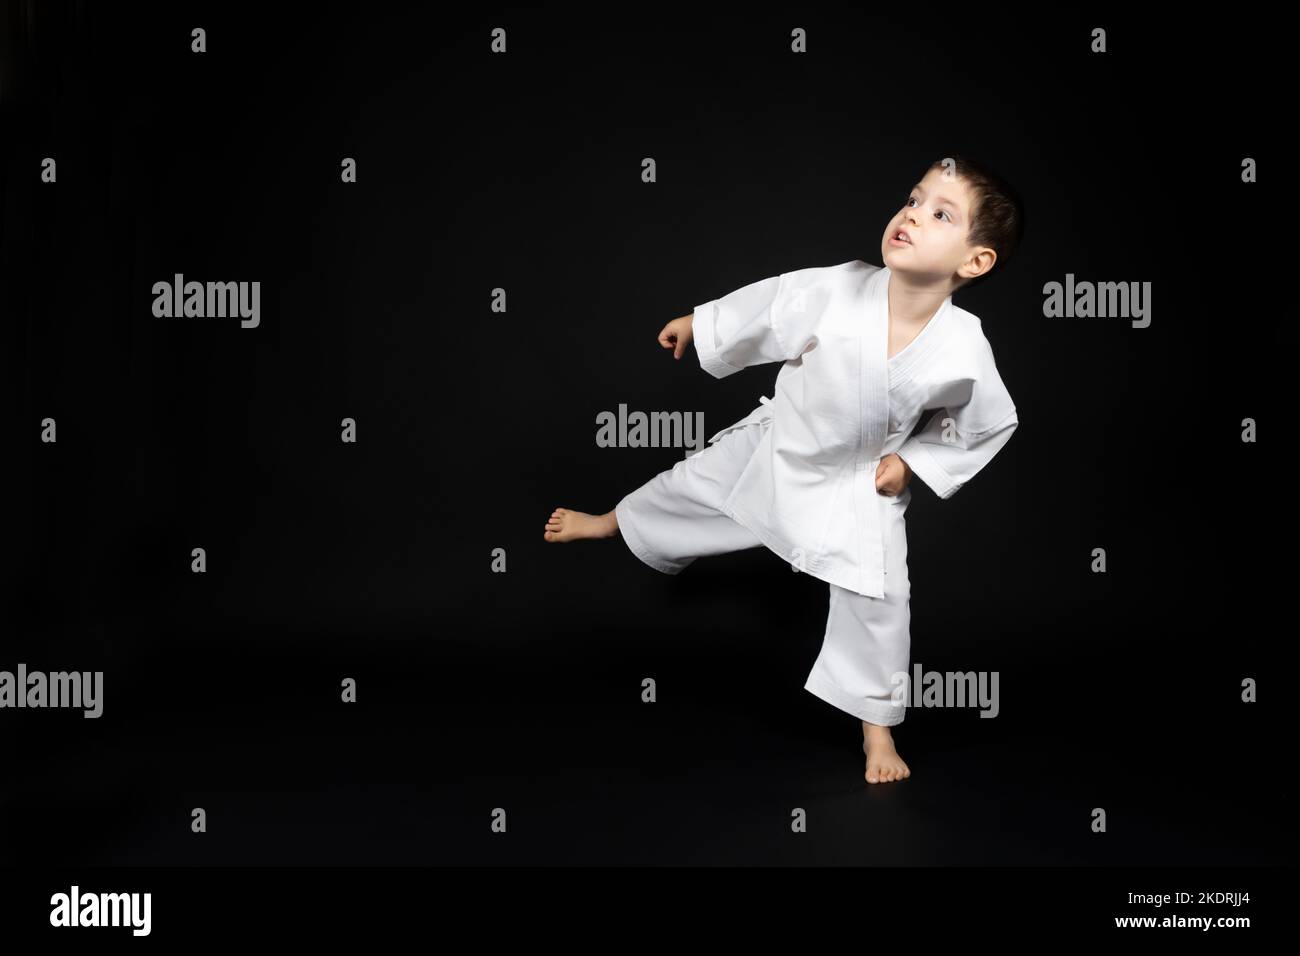 A little boy in a kimono practices karate on a black background, kicking forward. Stock Photo